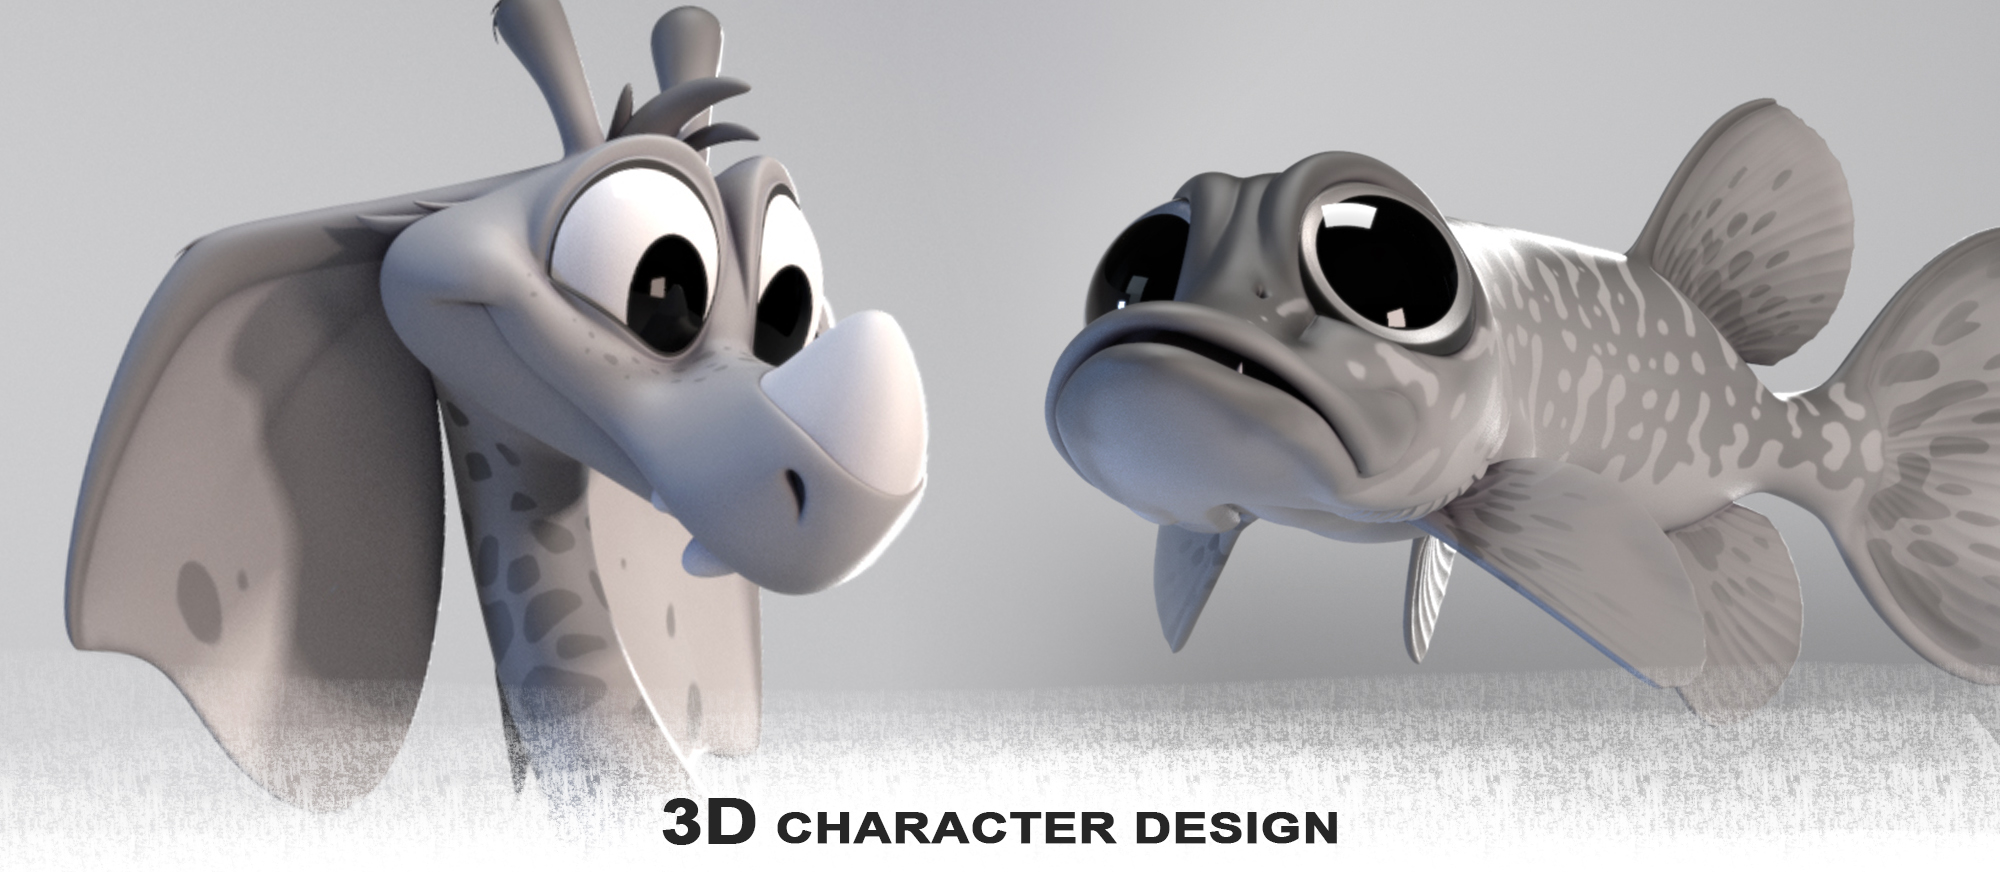 3D Character Design - Characters Design